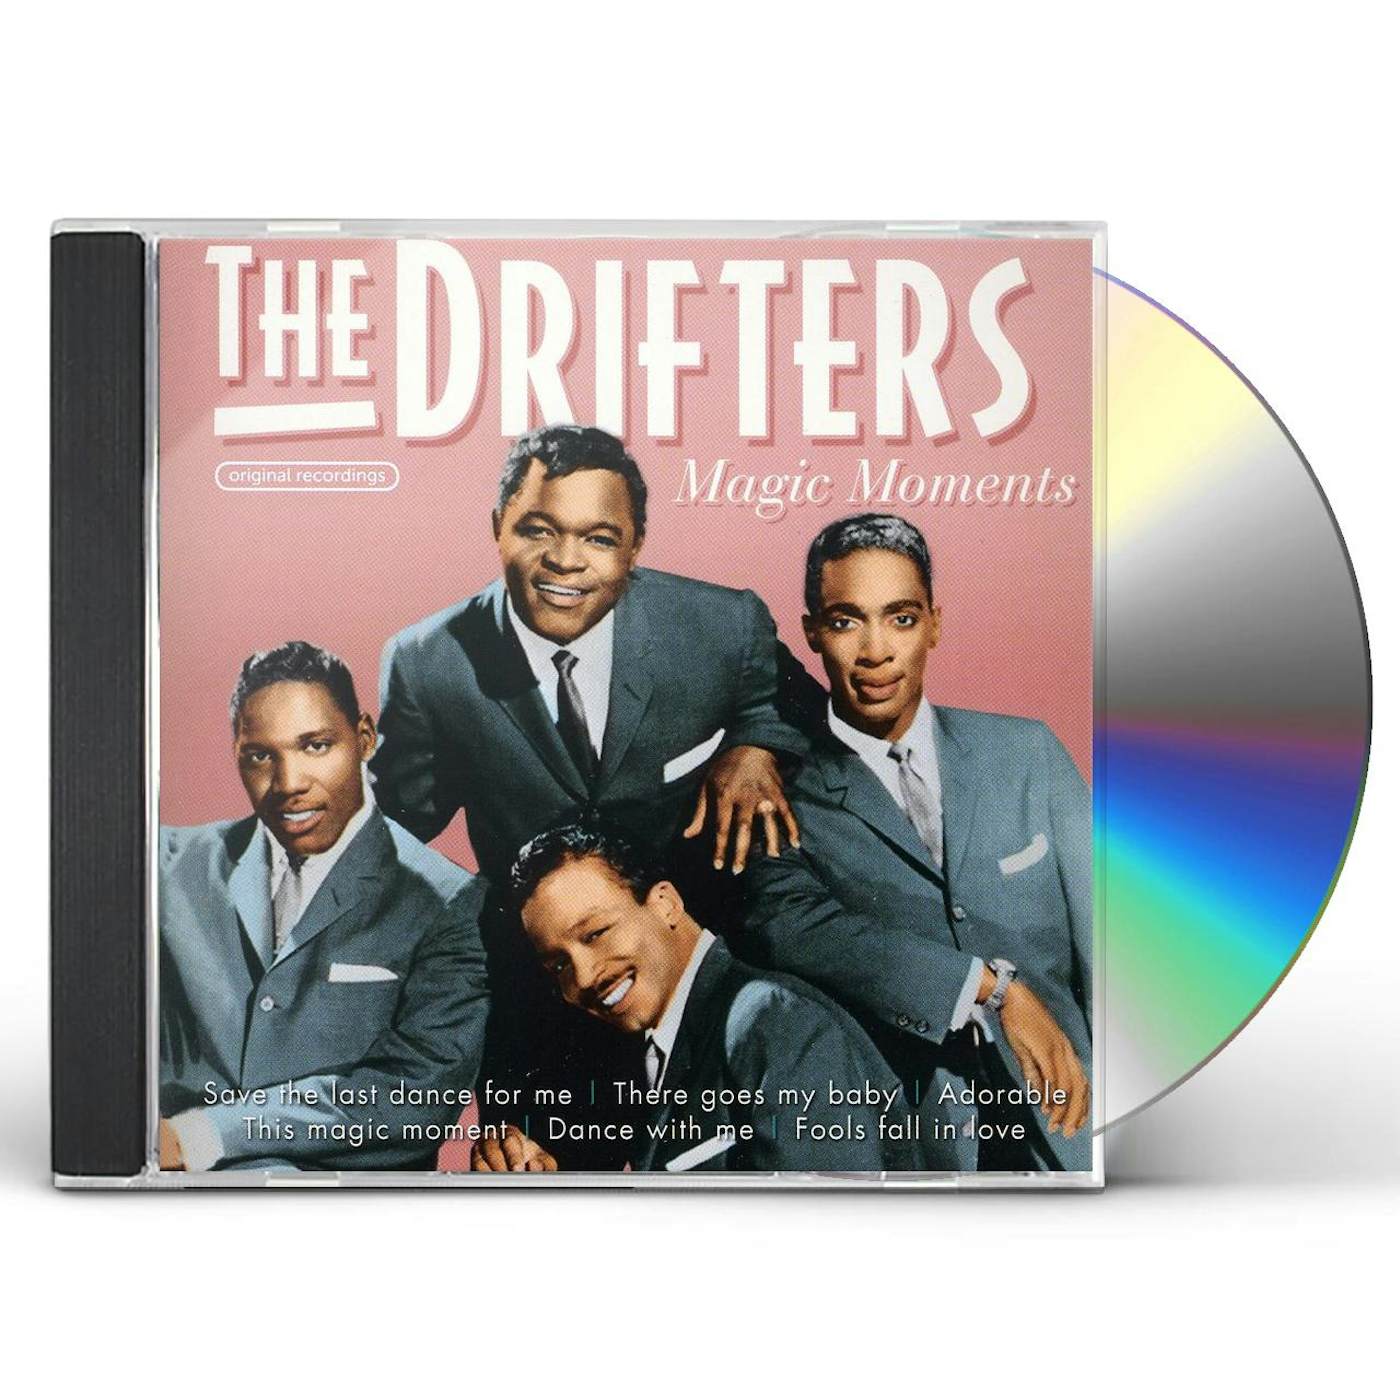 The Drifters MAGIC MOMENTS CD